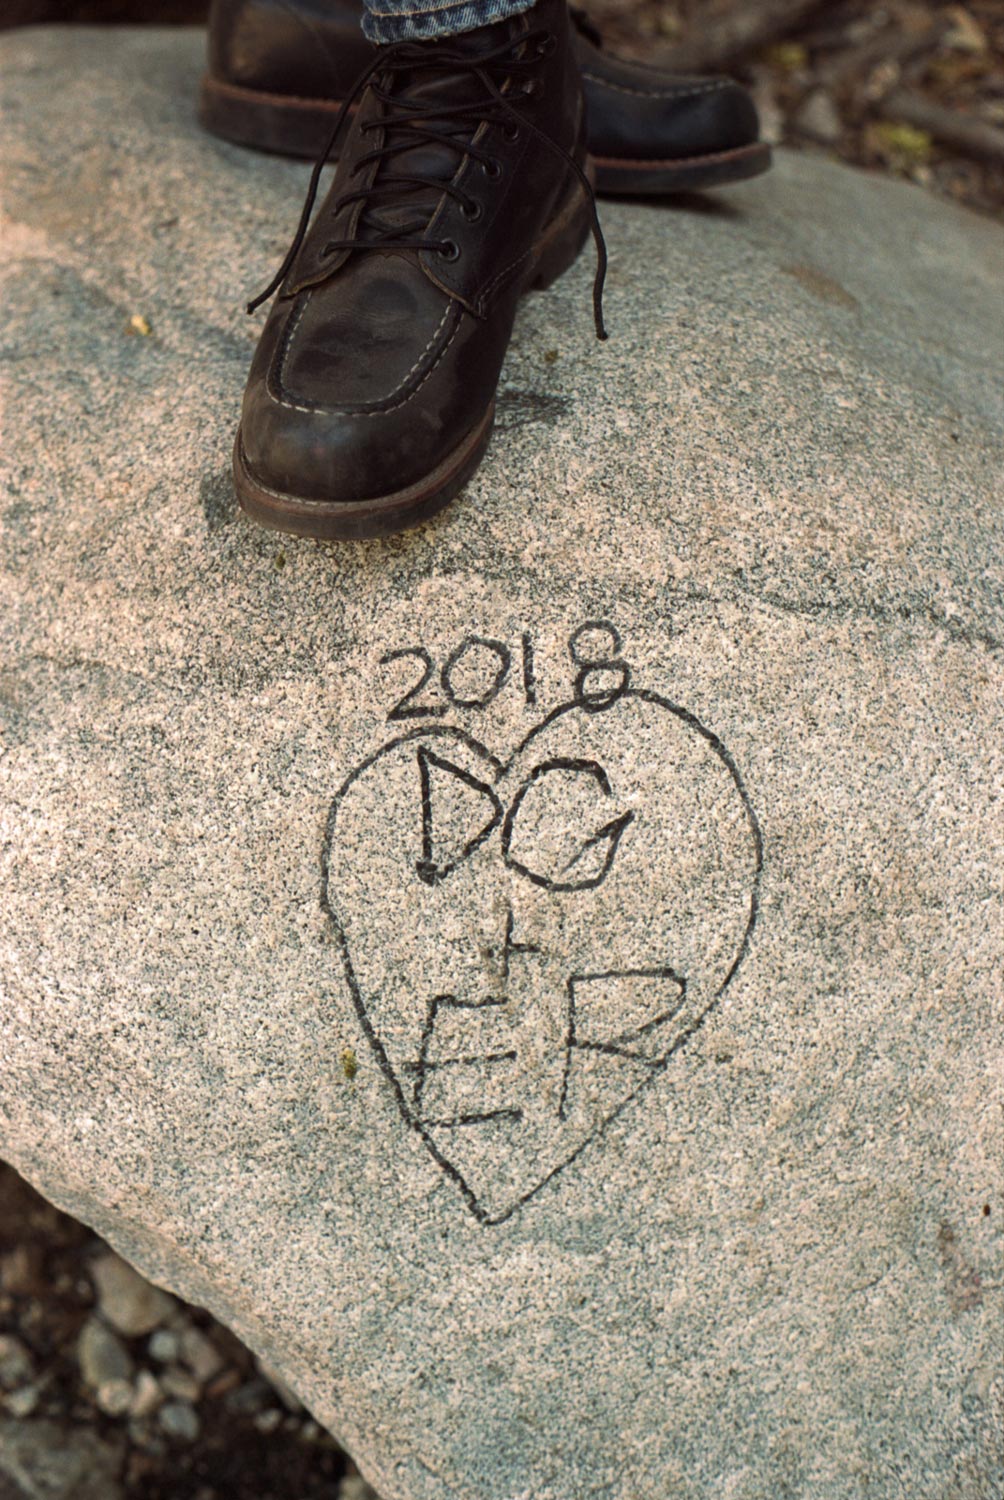 standing over heart shaped graffiti, initialed 2018, Switzer Falls.